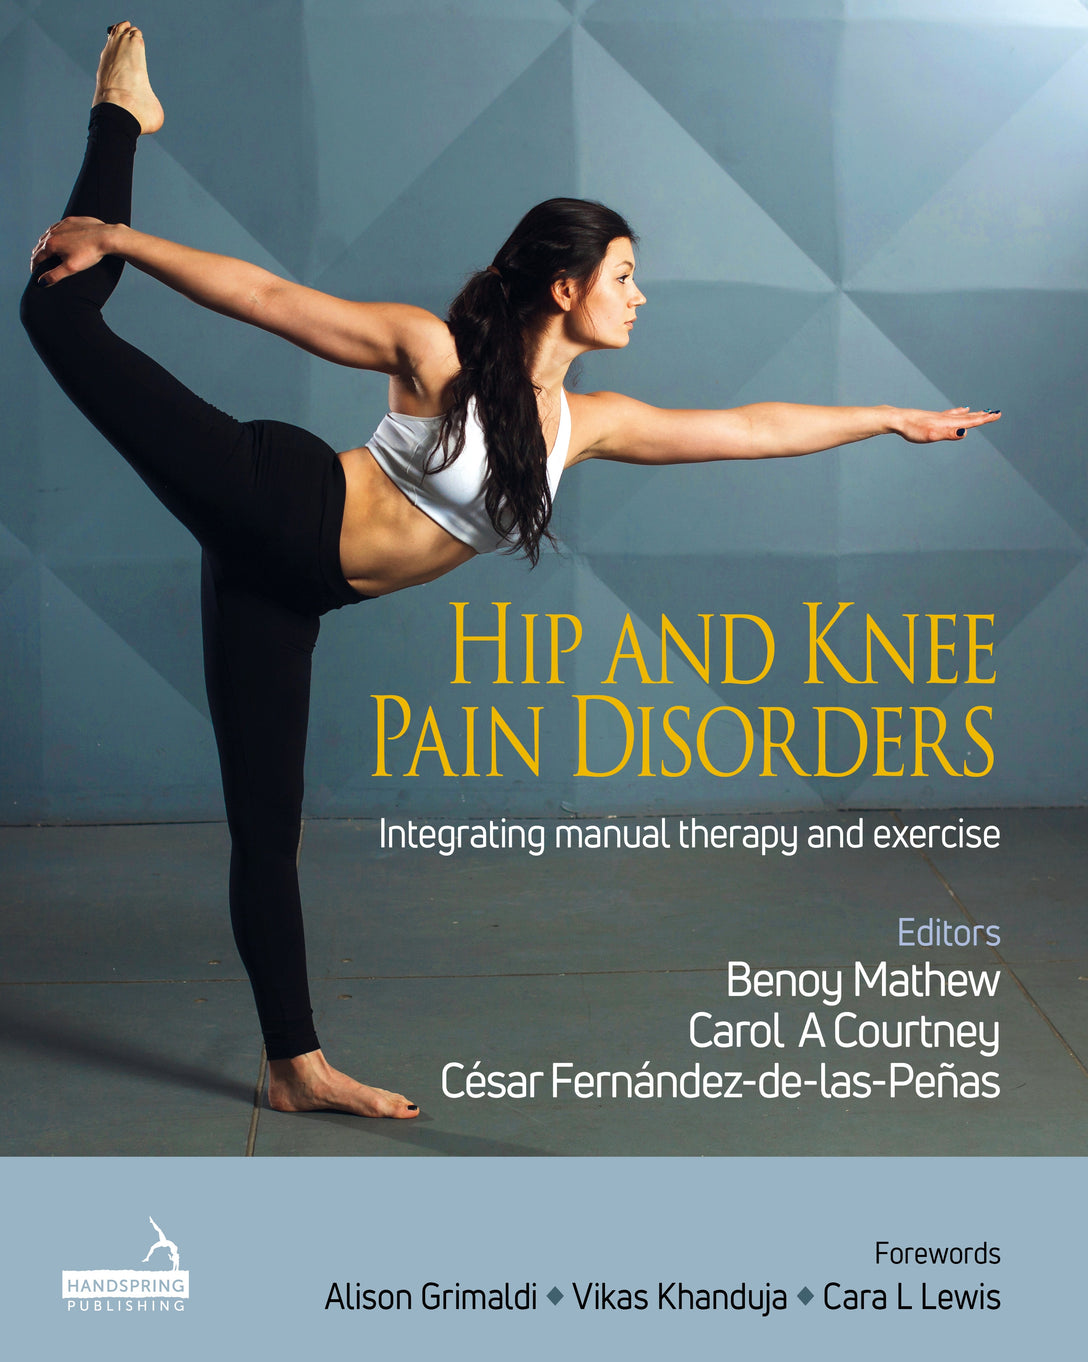 Hip and Knee Pain Disorders by Benoy Mathew, Benoy Mathew, Carol Courtney, César Fernández-de-las-Peñas